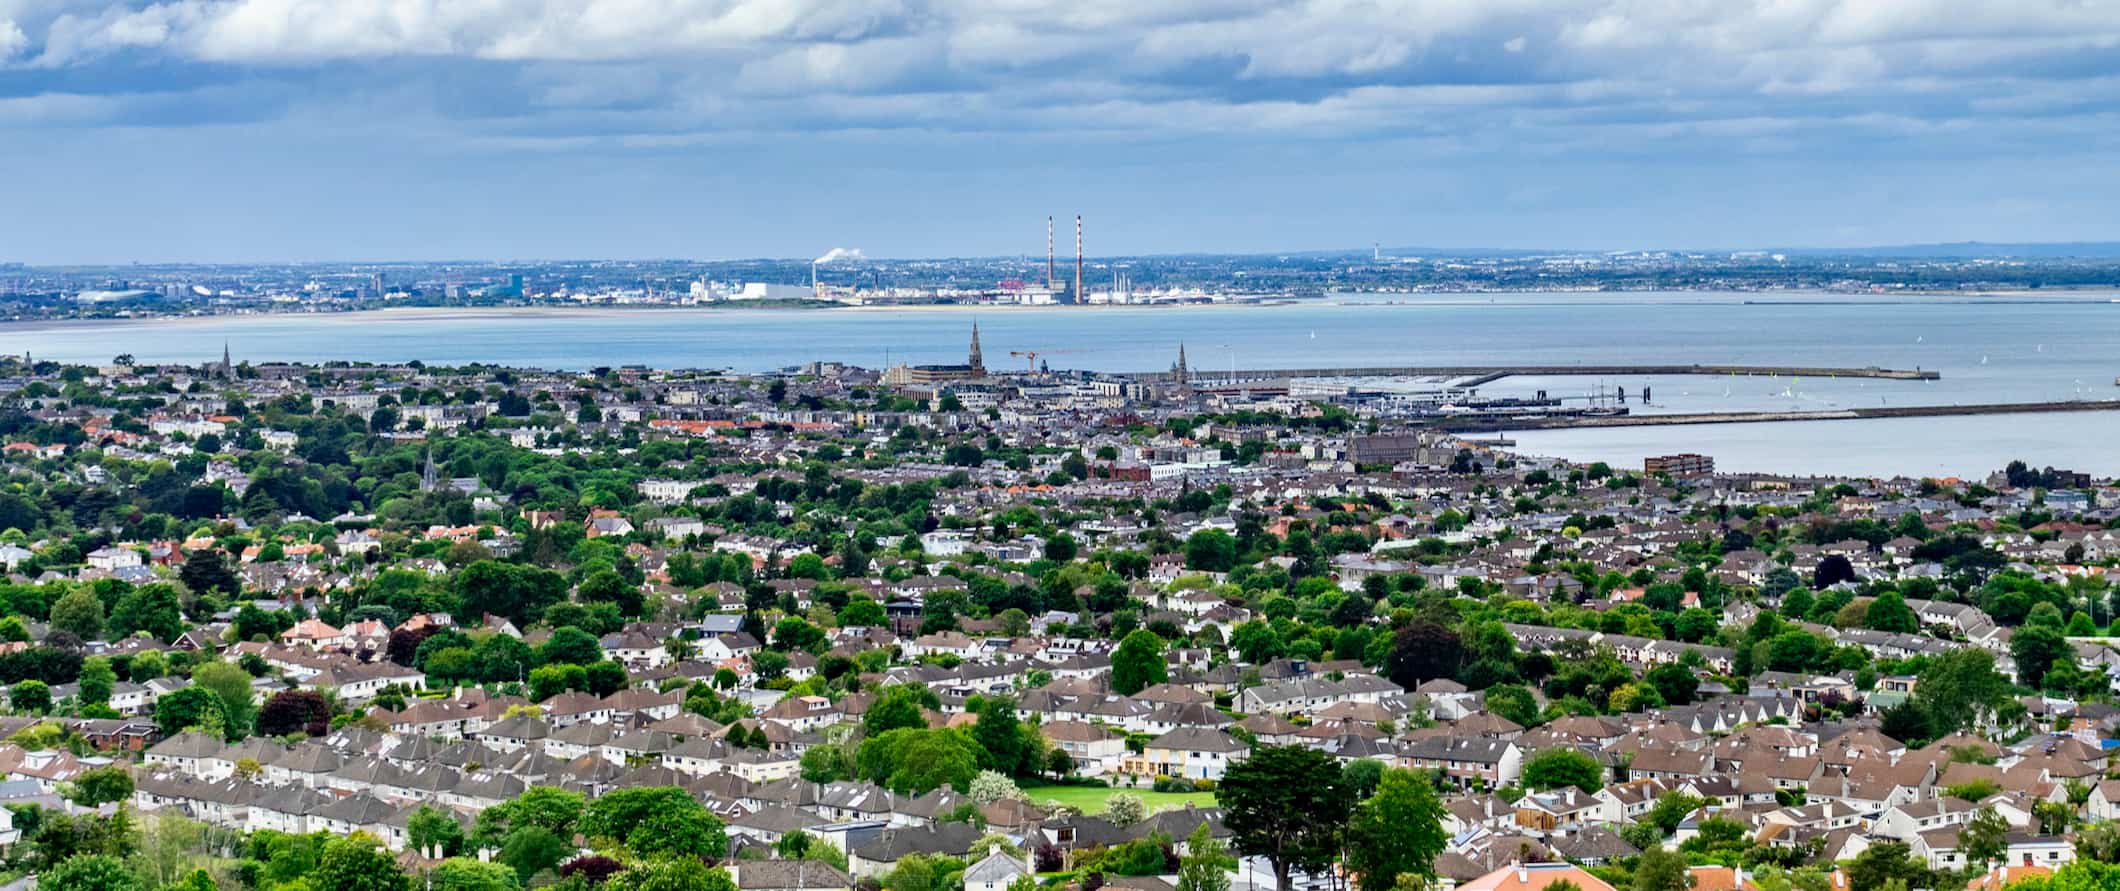 The view overlooking the landscape around Dublin, Ireland